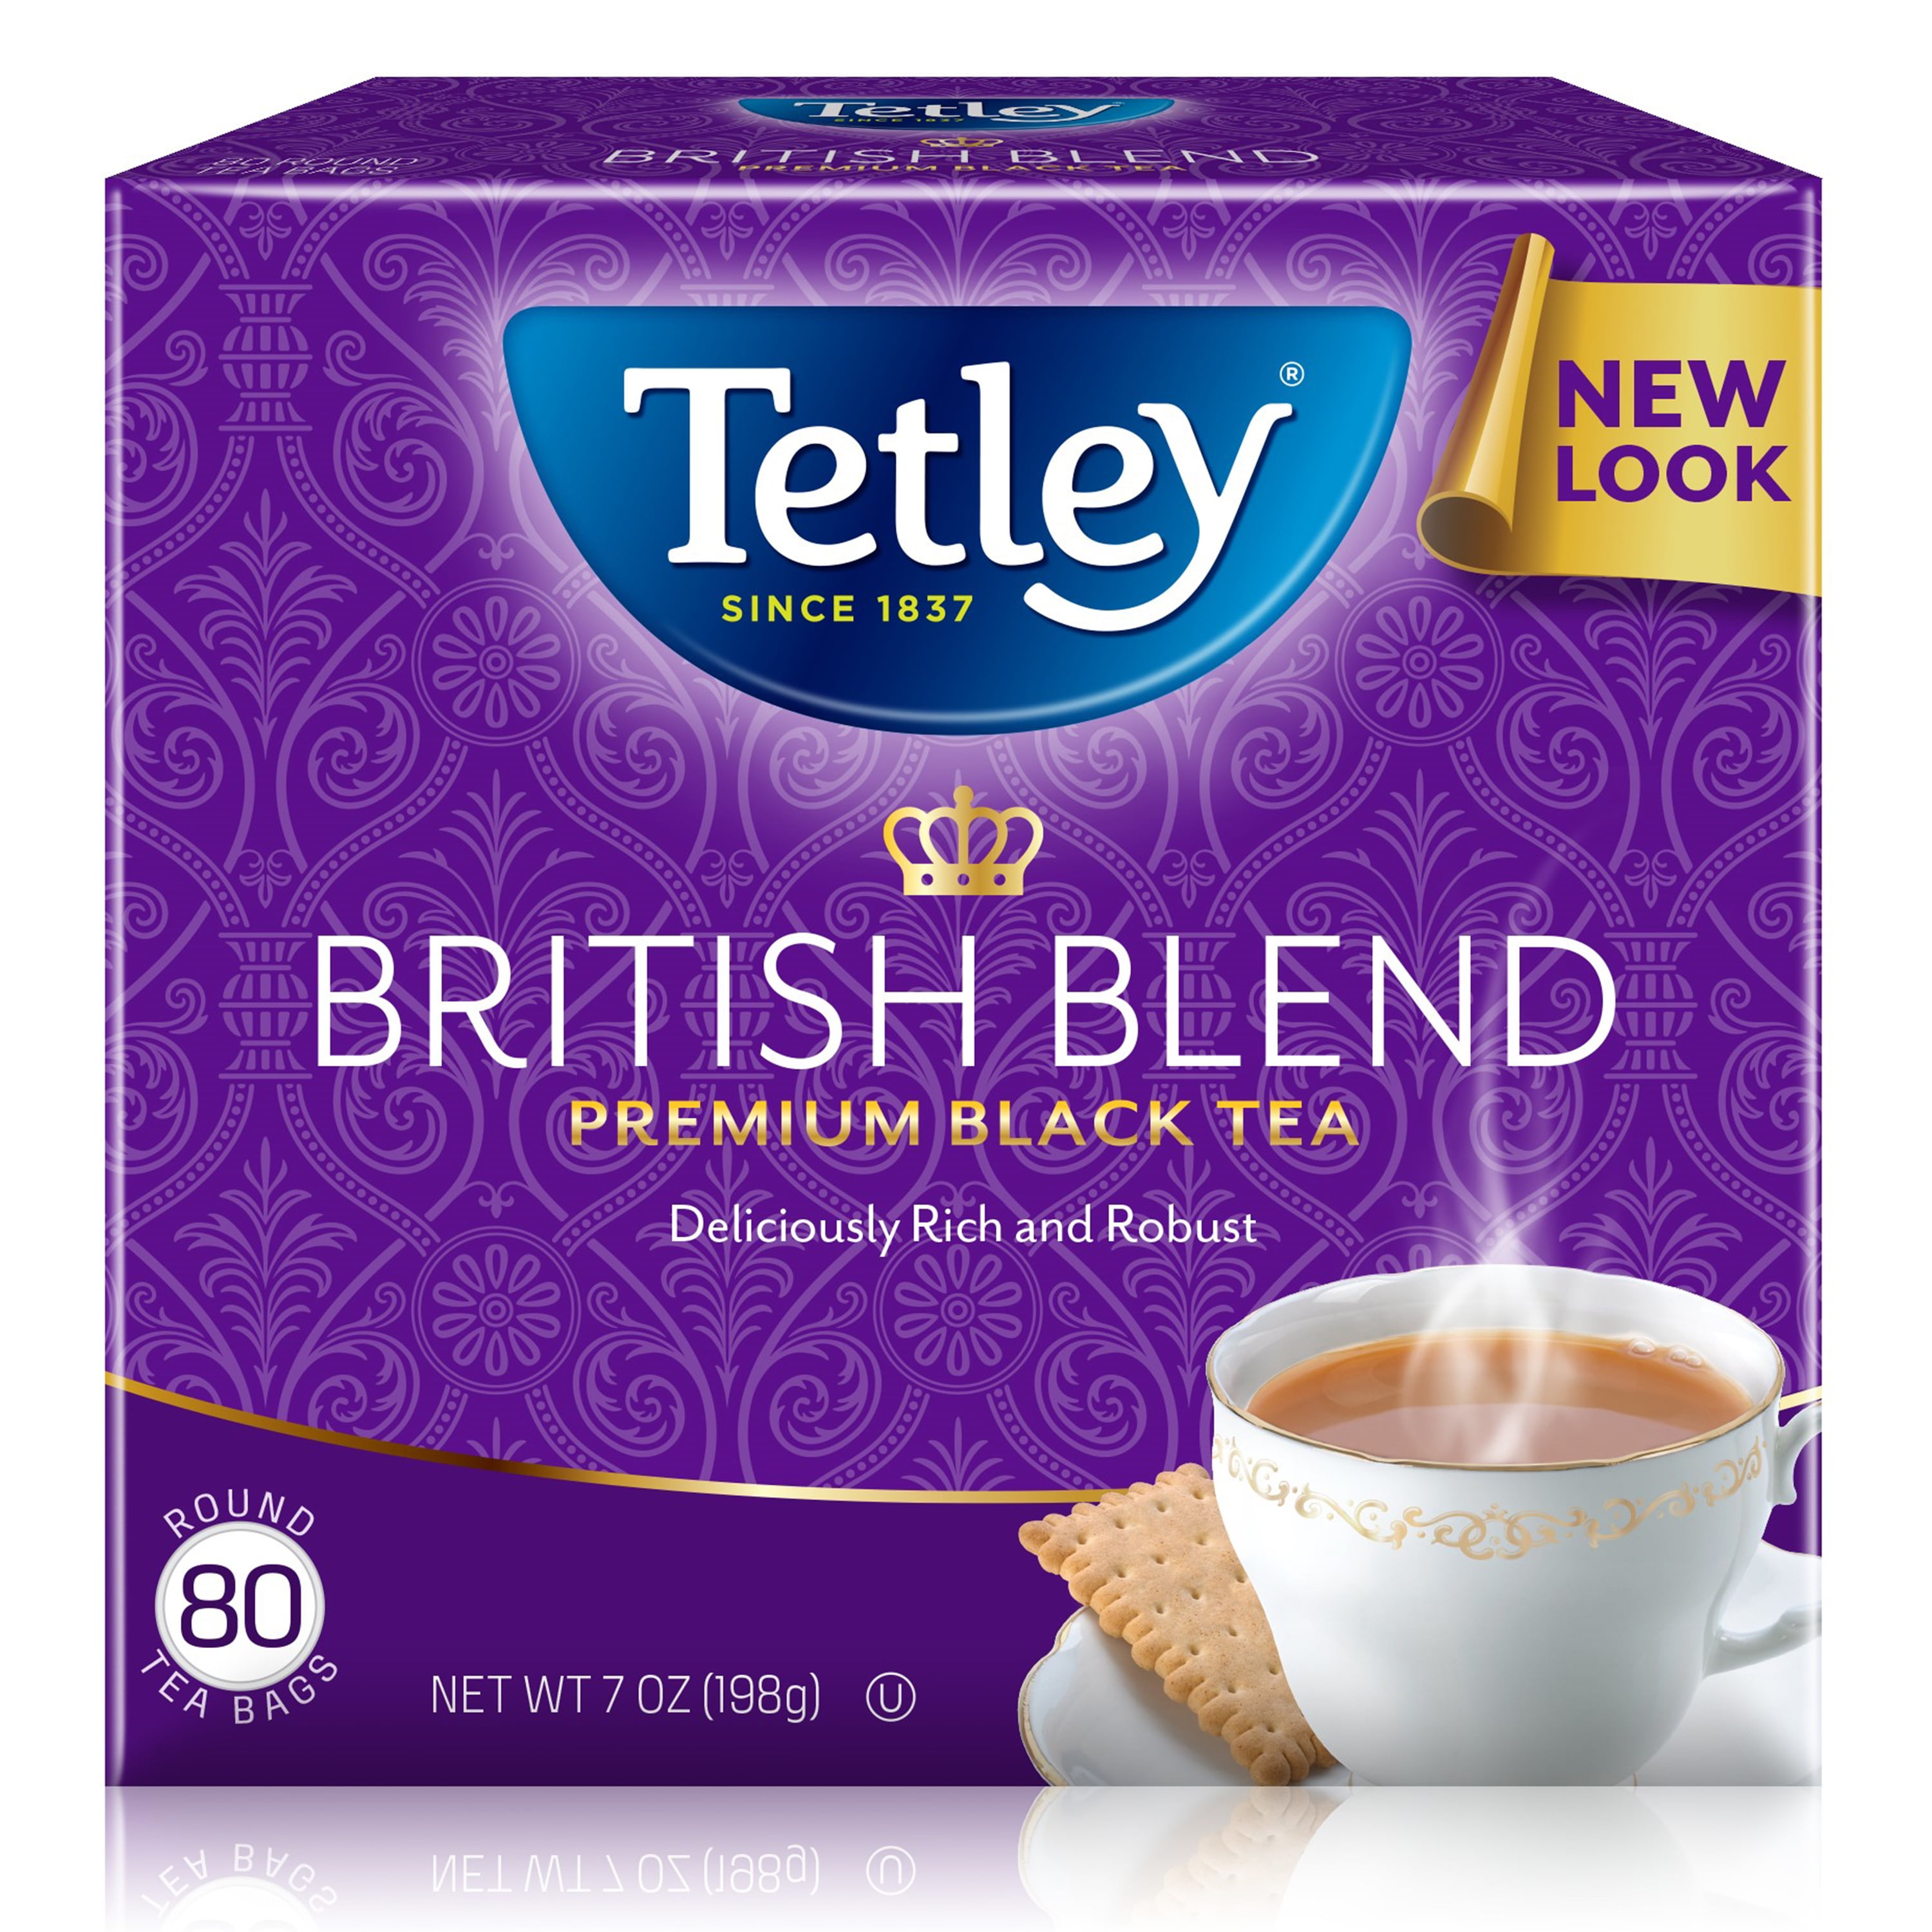 Tetley British Blend Premium Black Tea, 80 Count Tea Bags